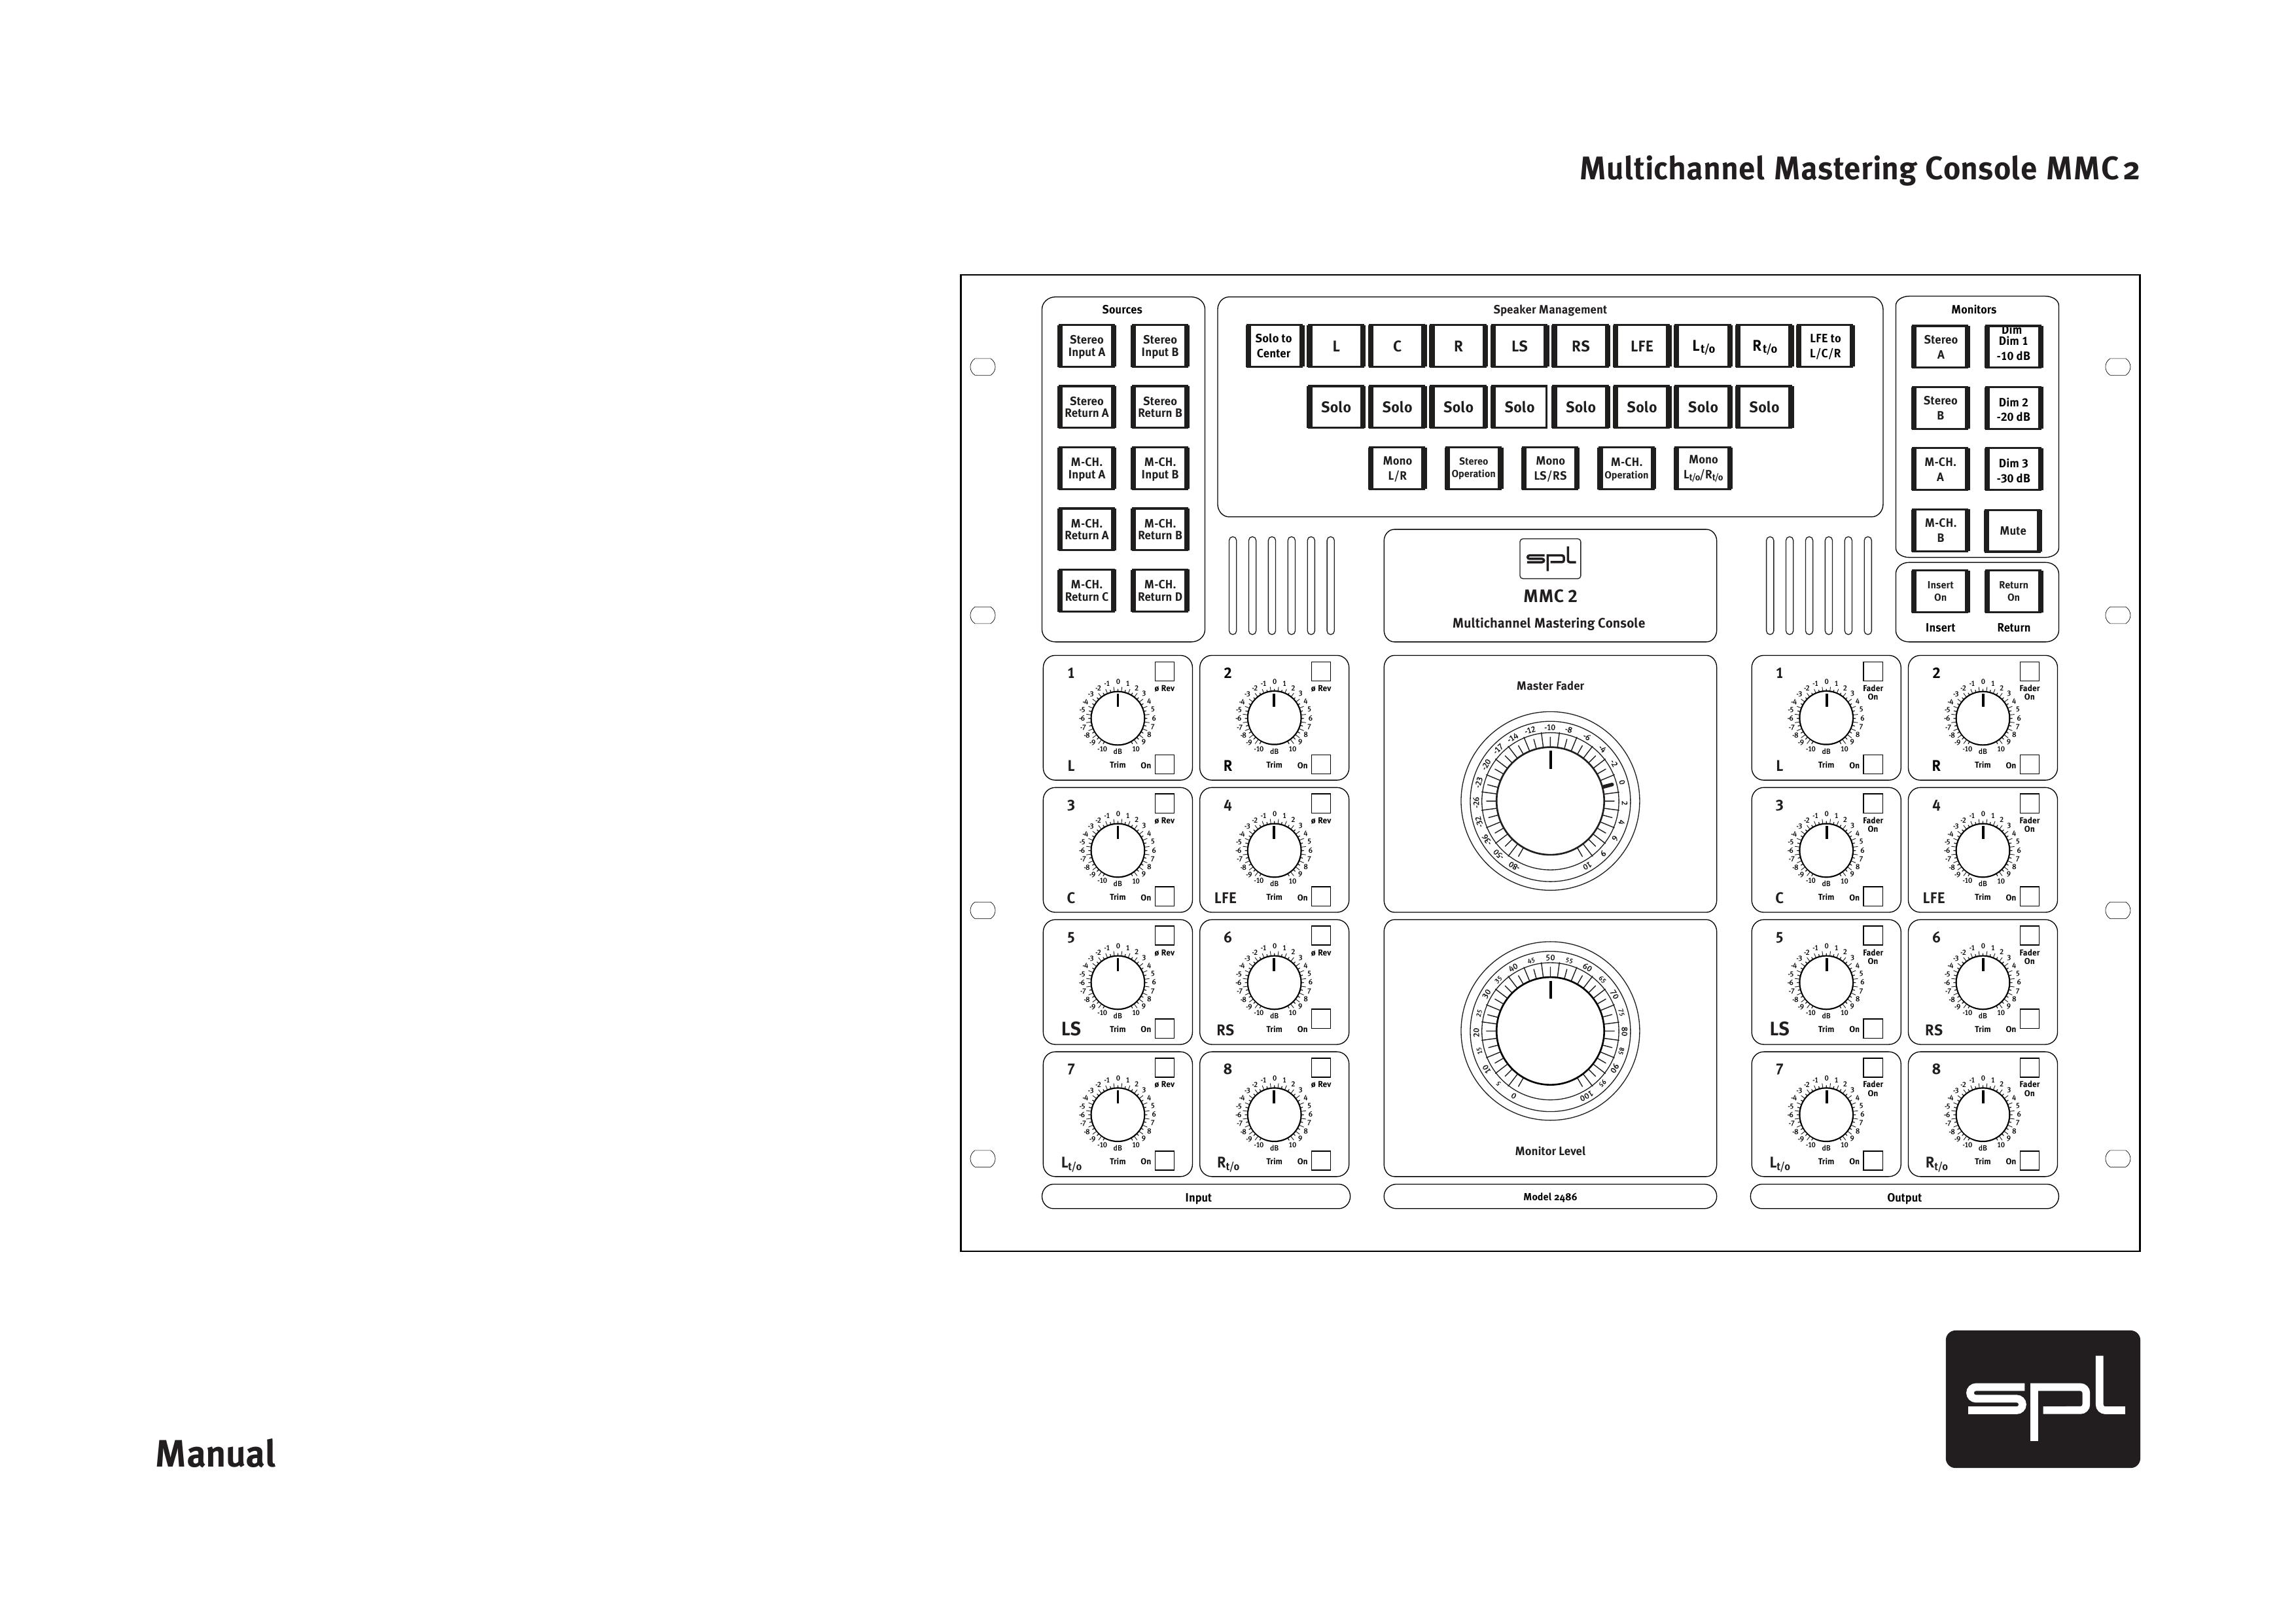 Sound Performance Lab MMC2 Musical Instrument User Manual